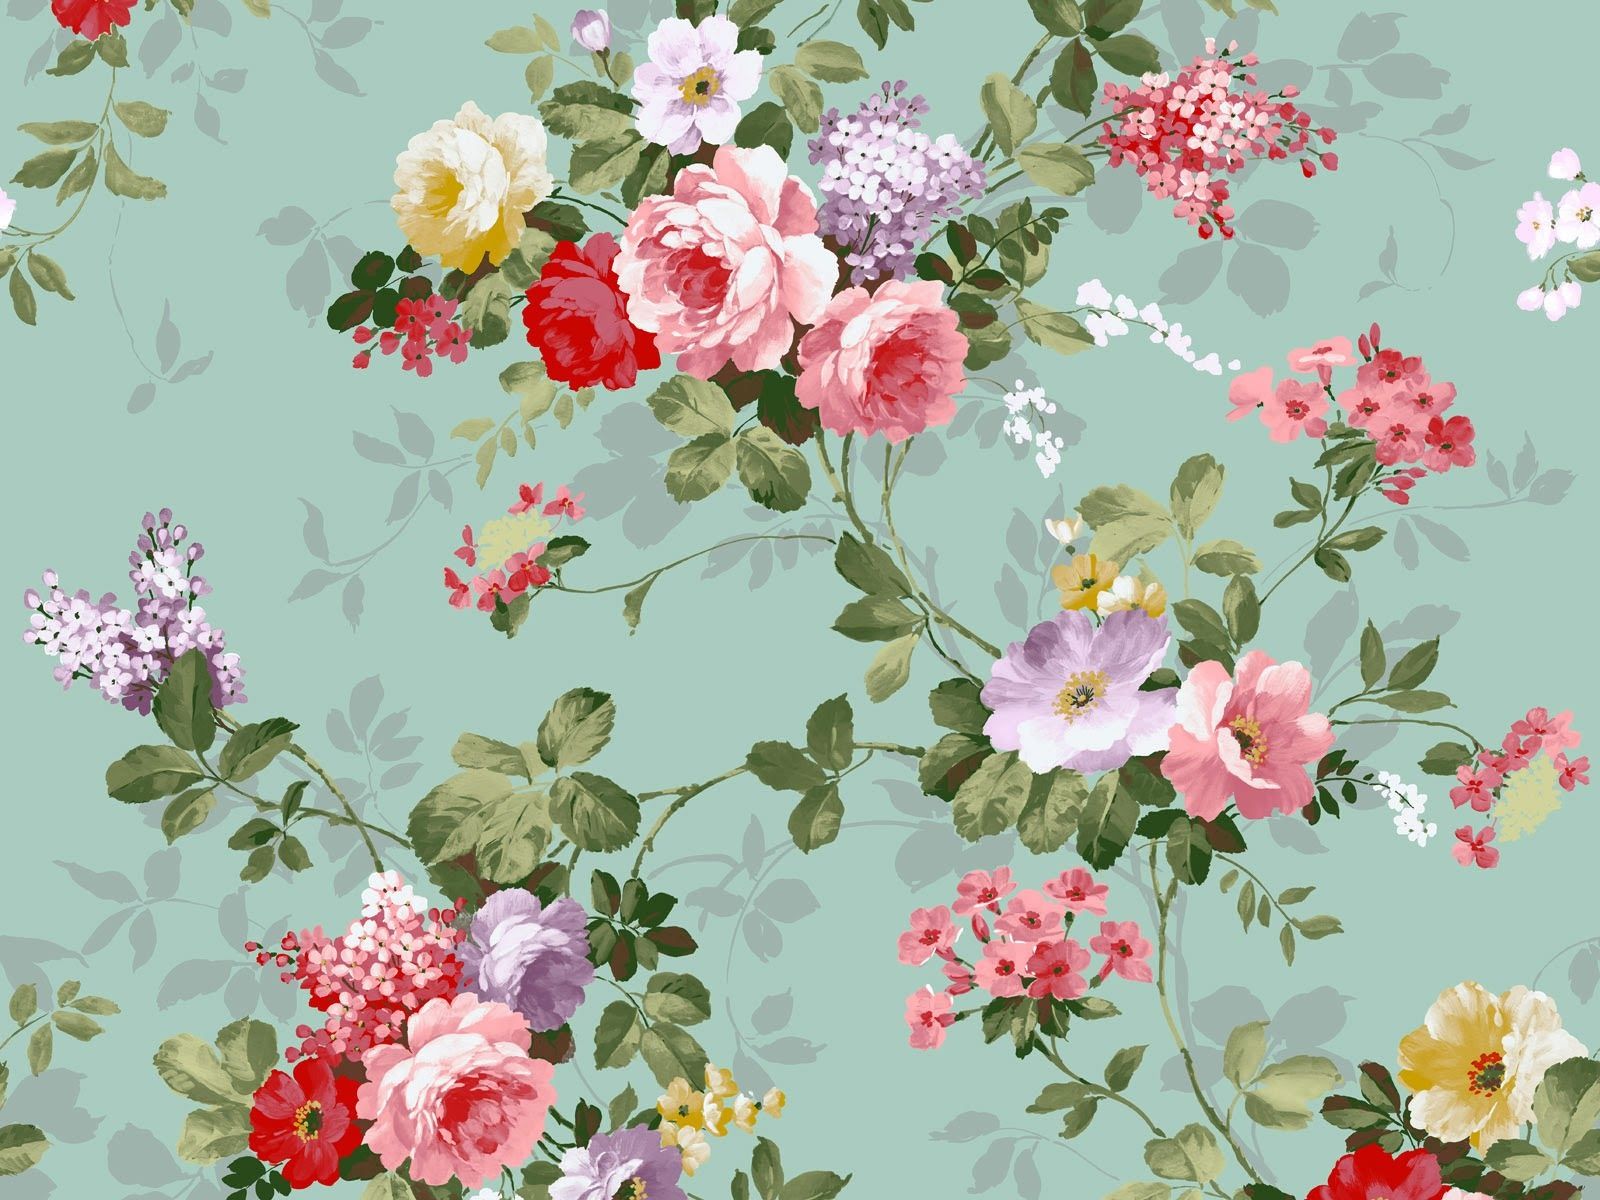 FREE Floral Vintage Wallpaper in PSD